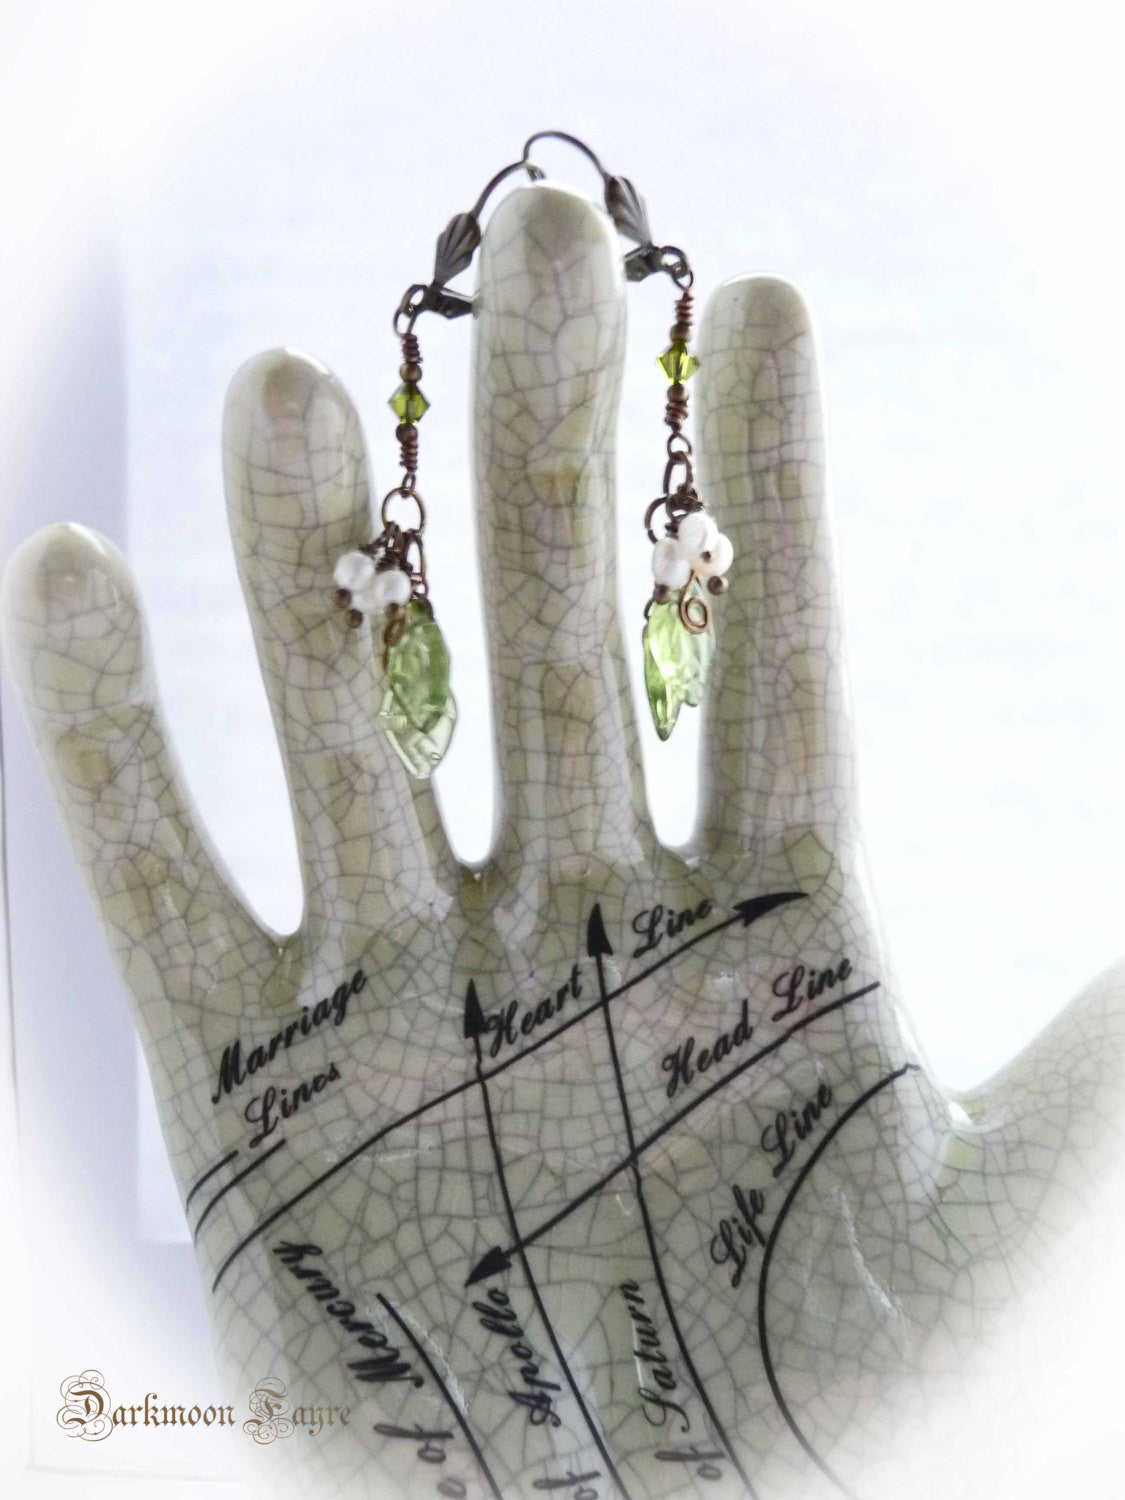 Mistletoe Earrings. Freshwater Pearl & Glass Leaves. Antiqued Bronze. Olive Swarovski Crystals - Darkmoon Fayre